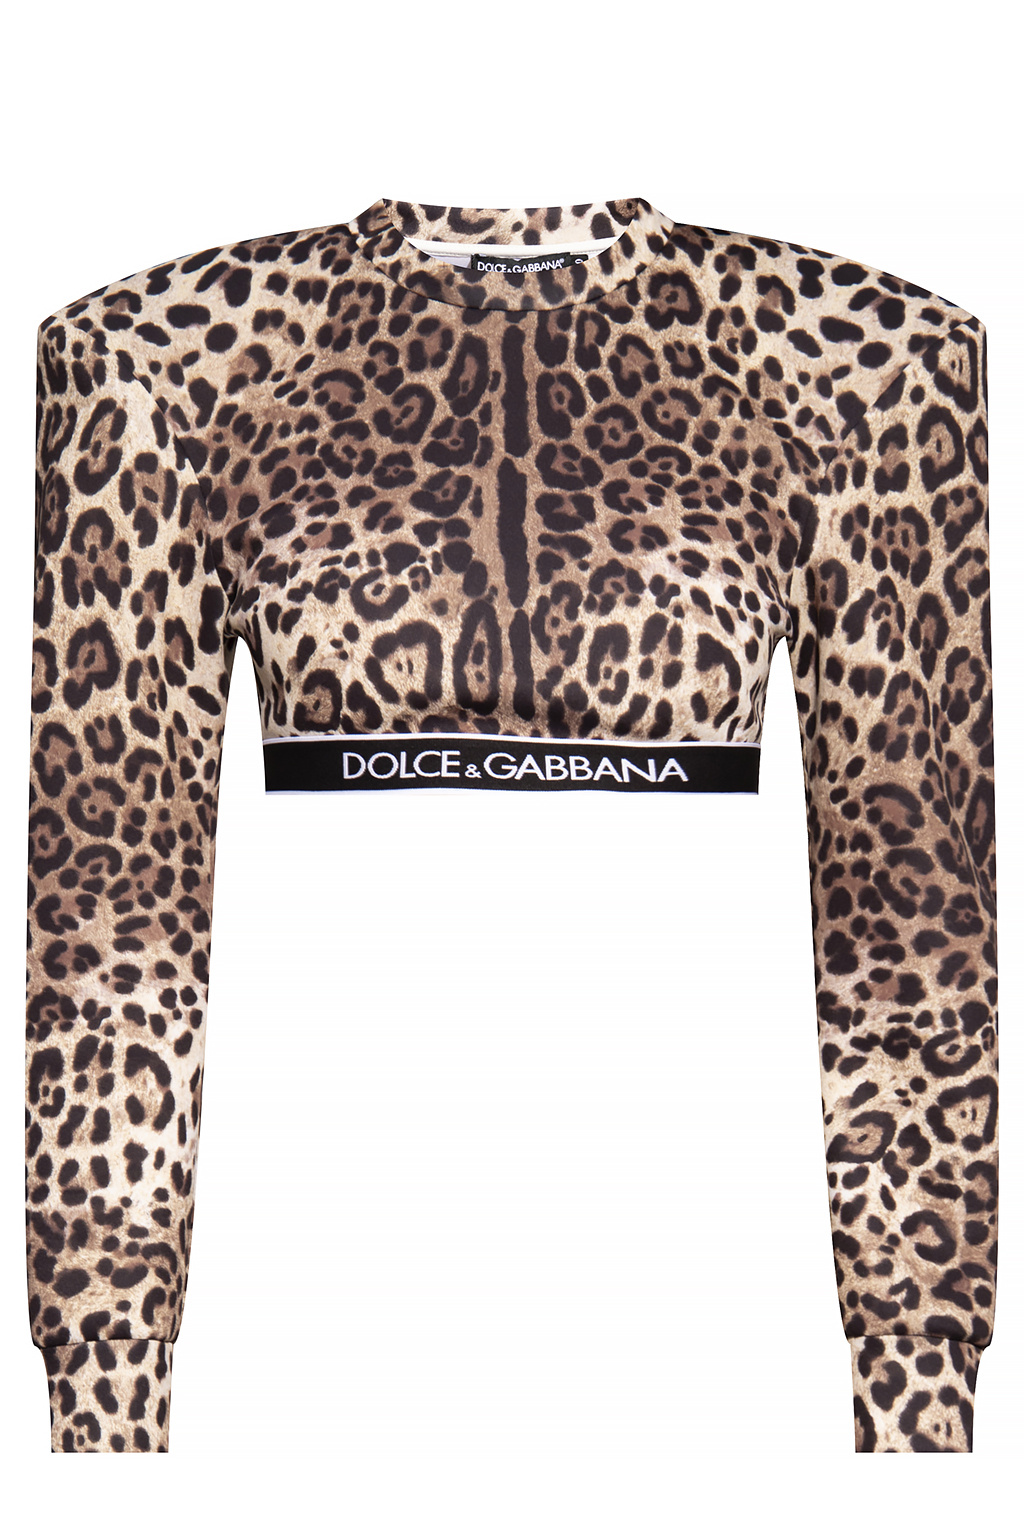 Dolce & Gabbana Cropped top with logo | Women's Clothing | IetpShops